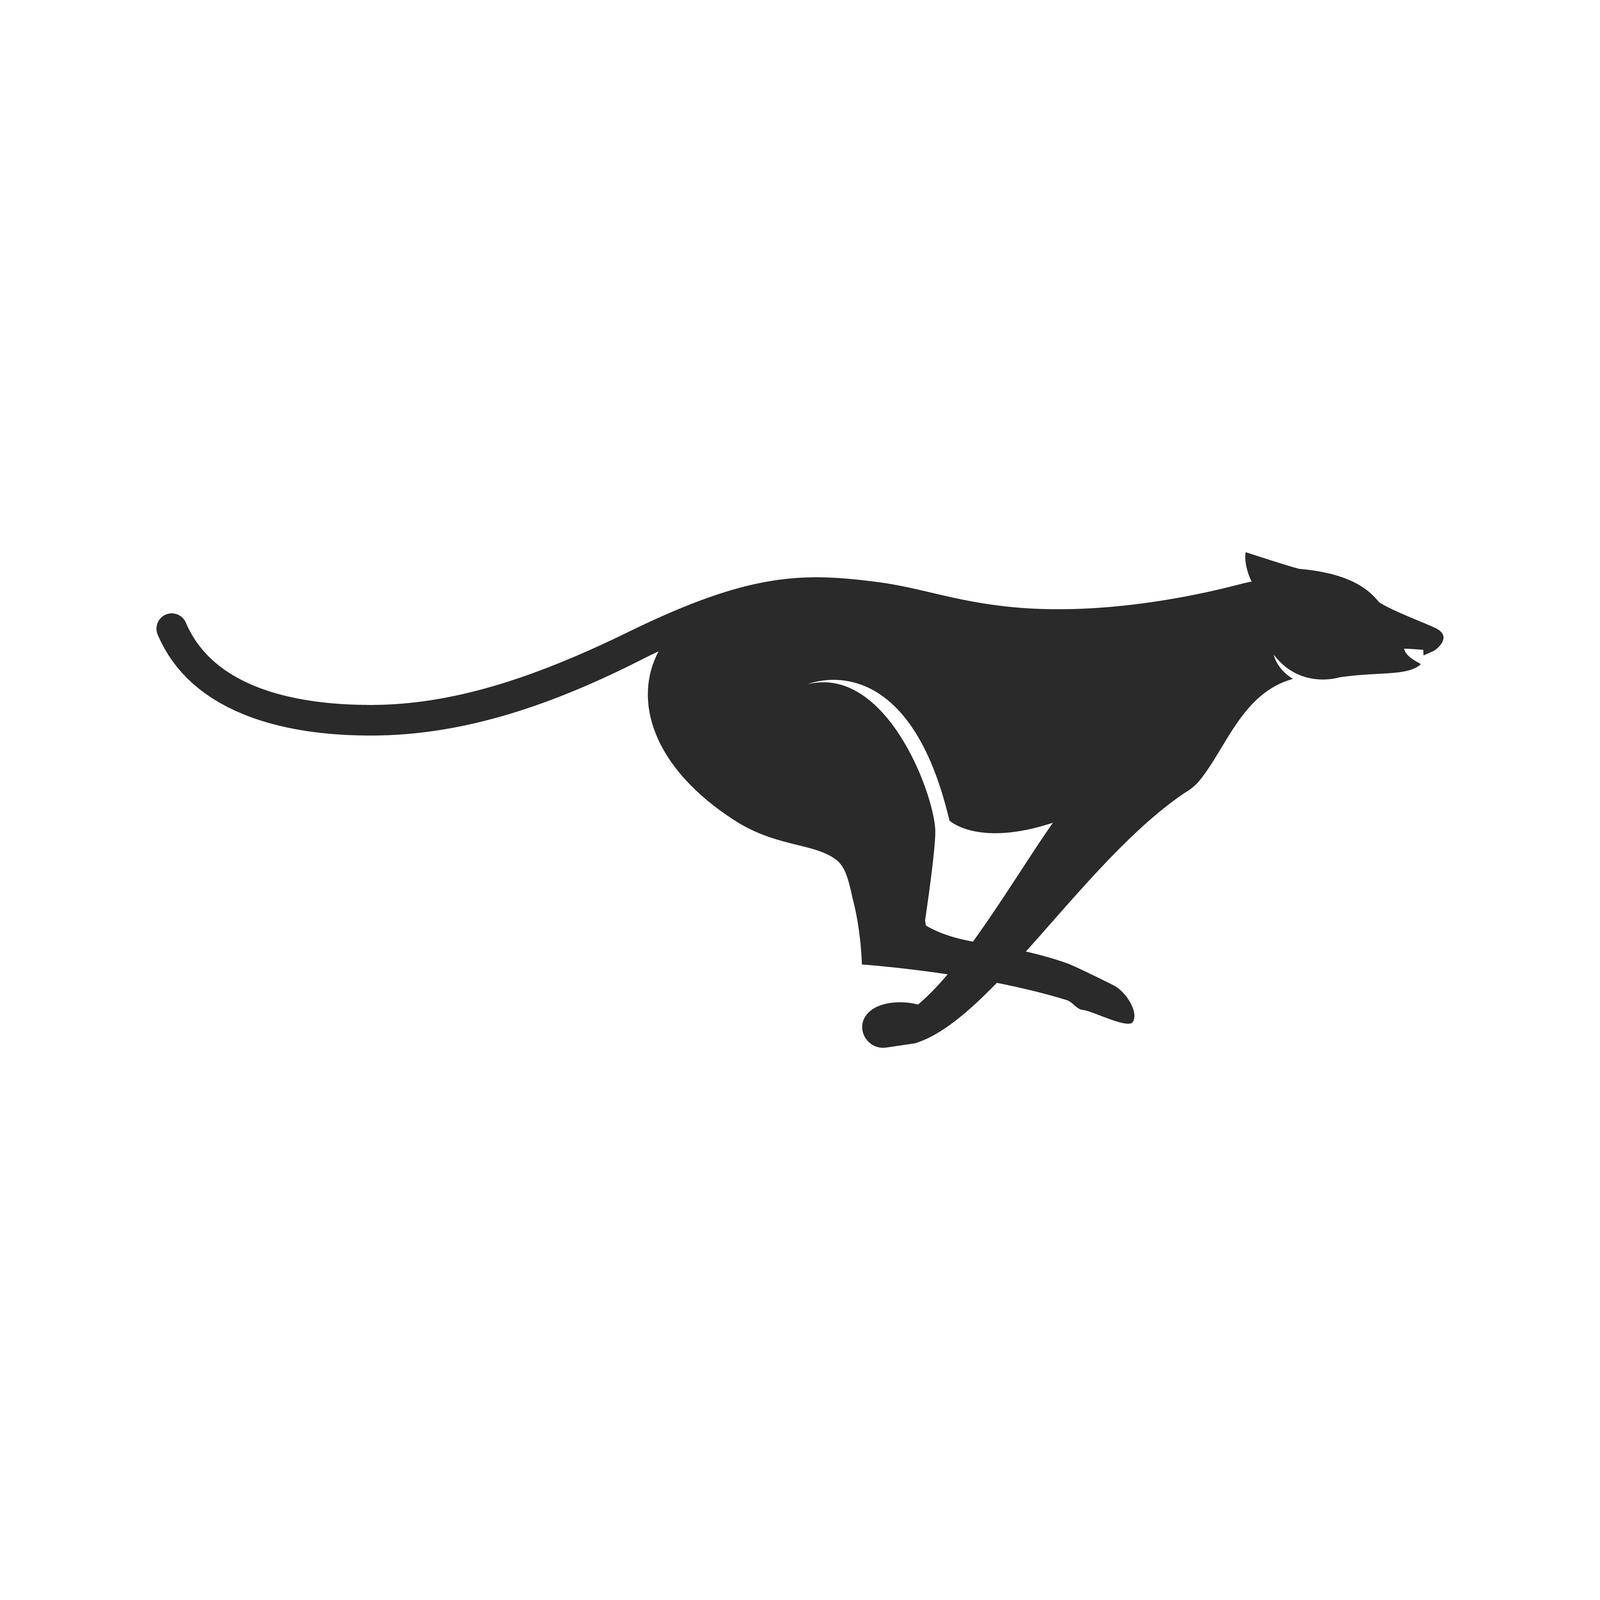 Cheetah logo illustration by awk